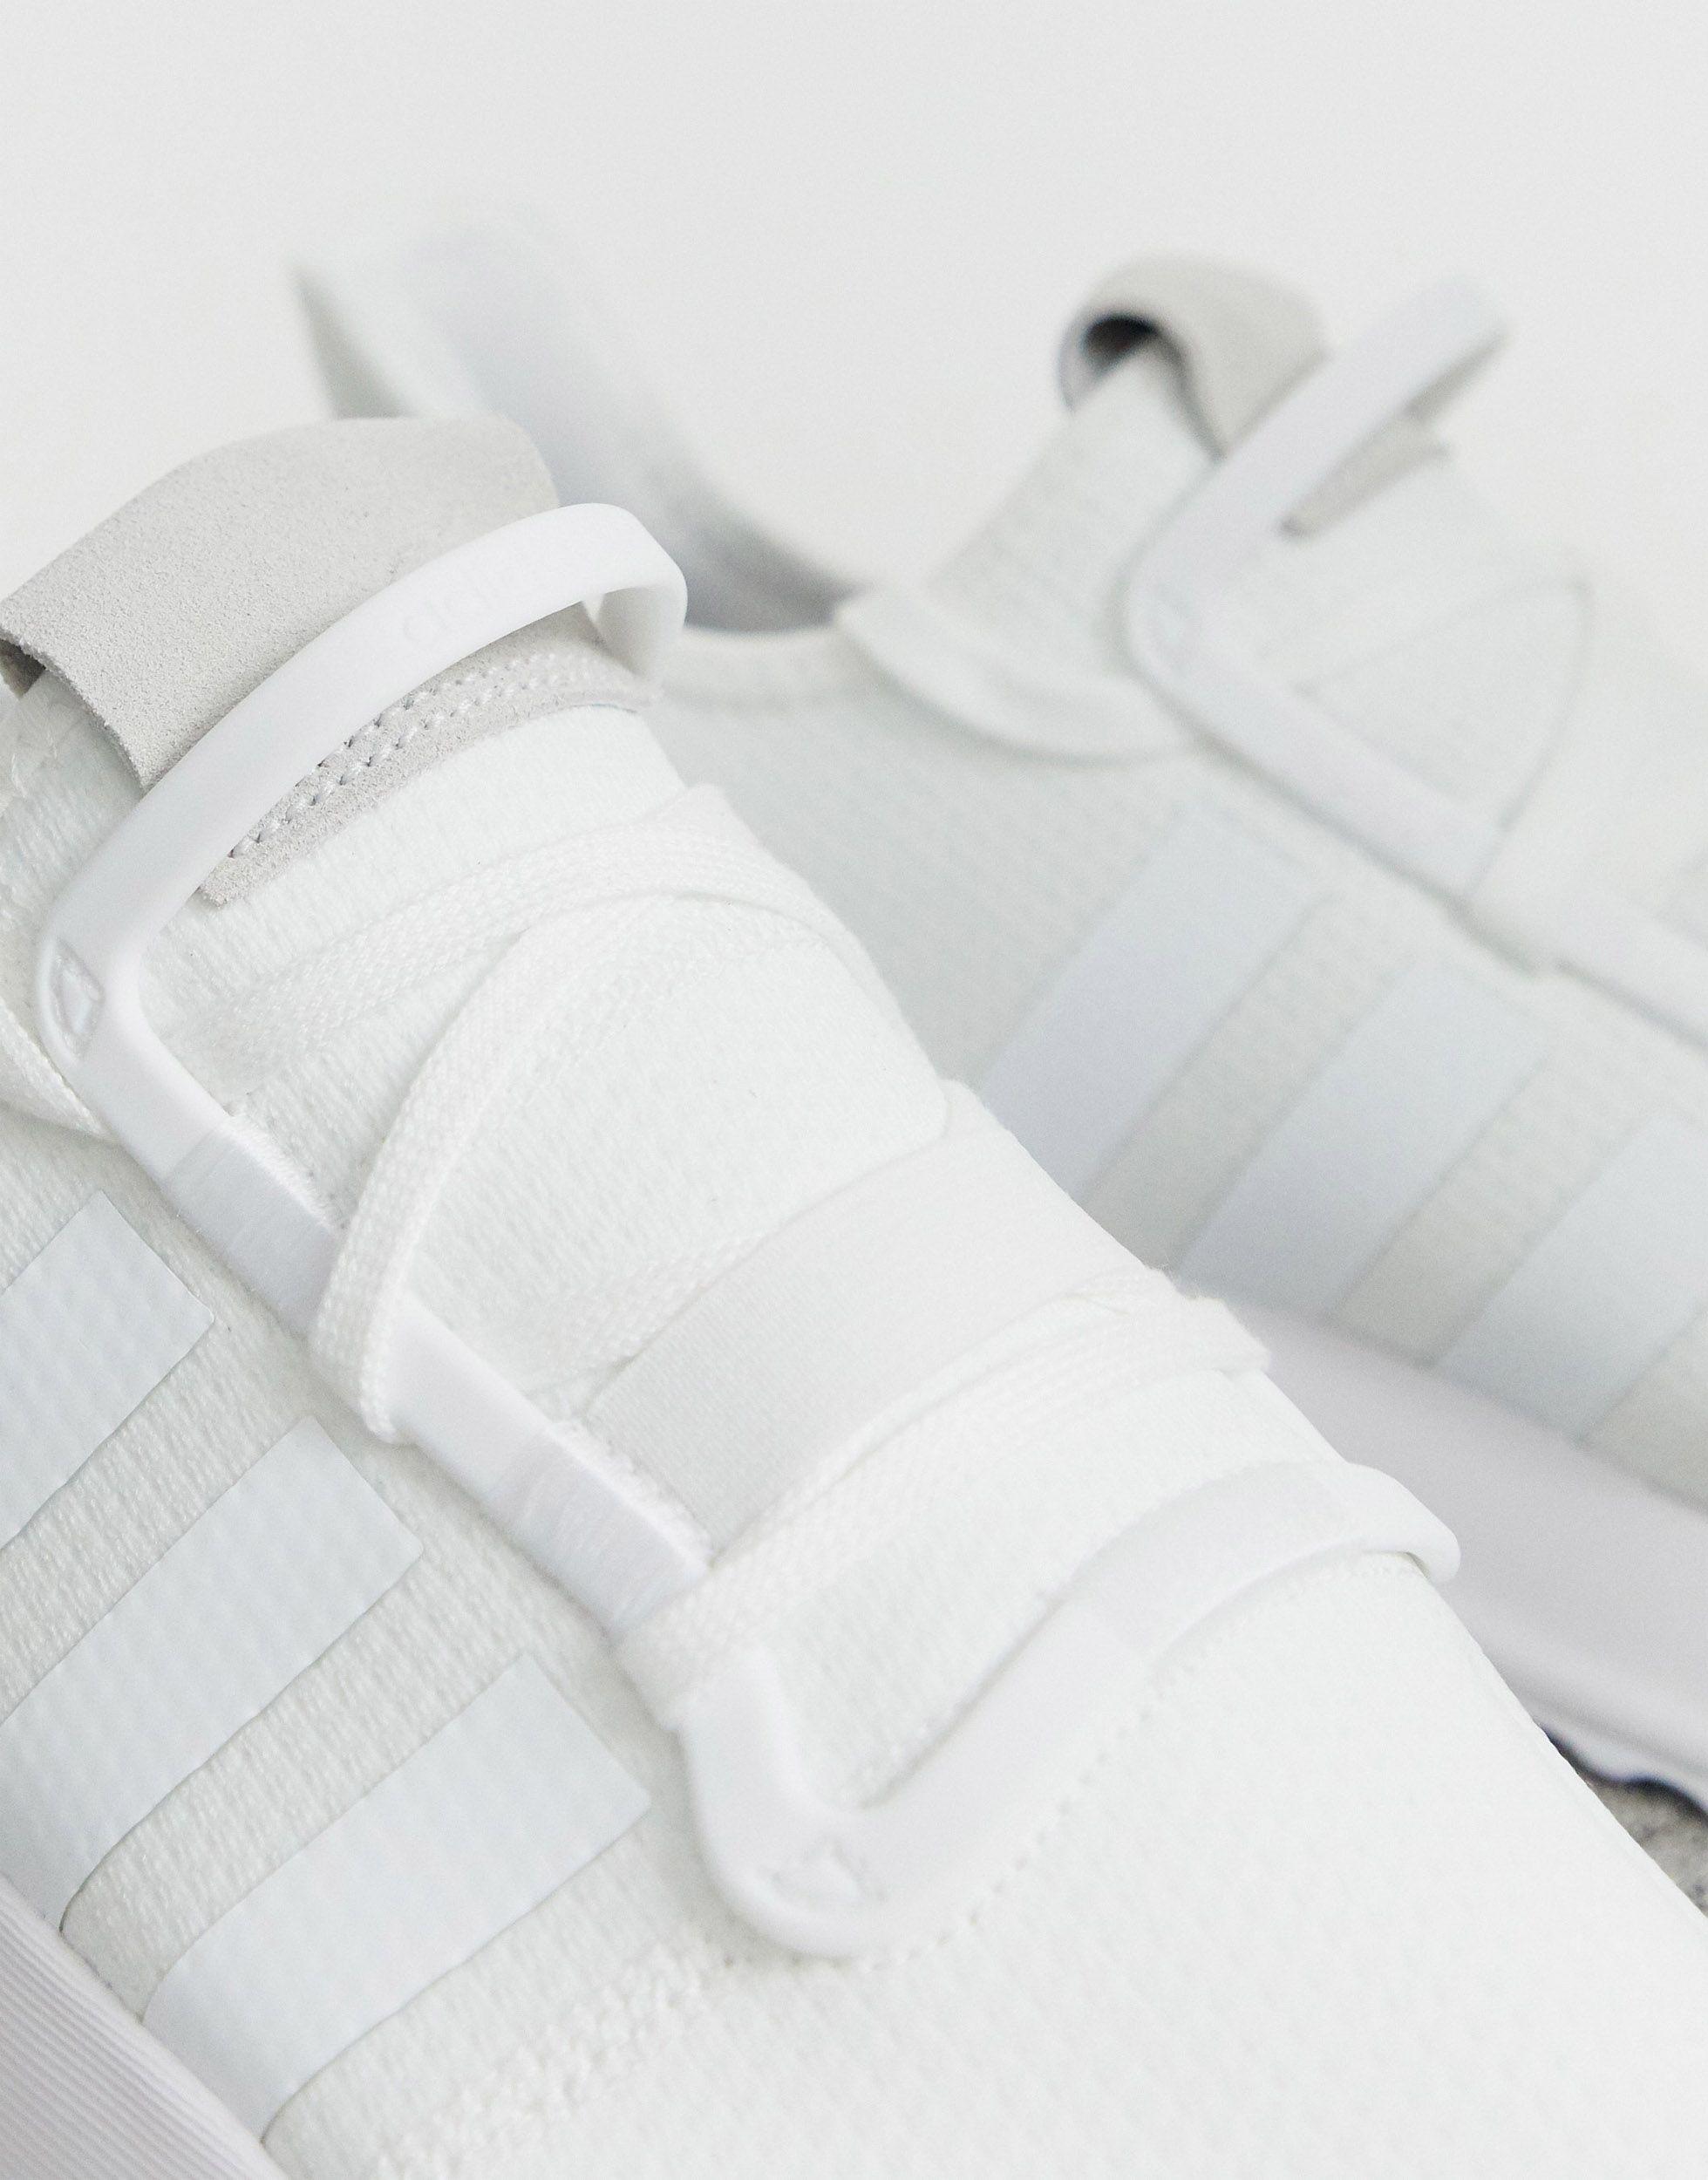 adidas originals u_path run trainers in triple white